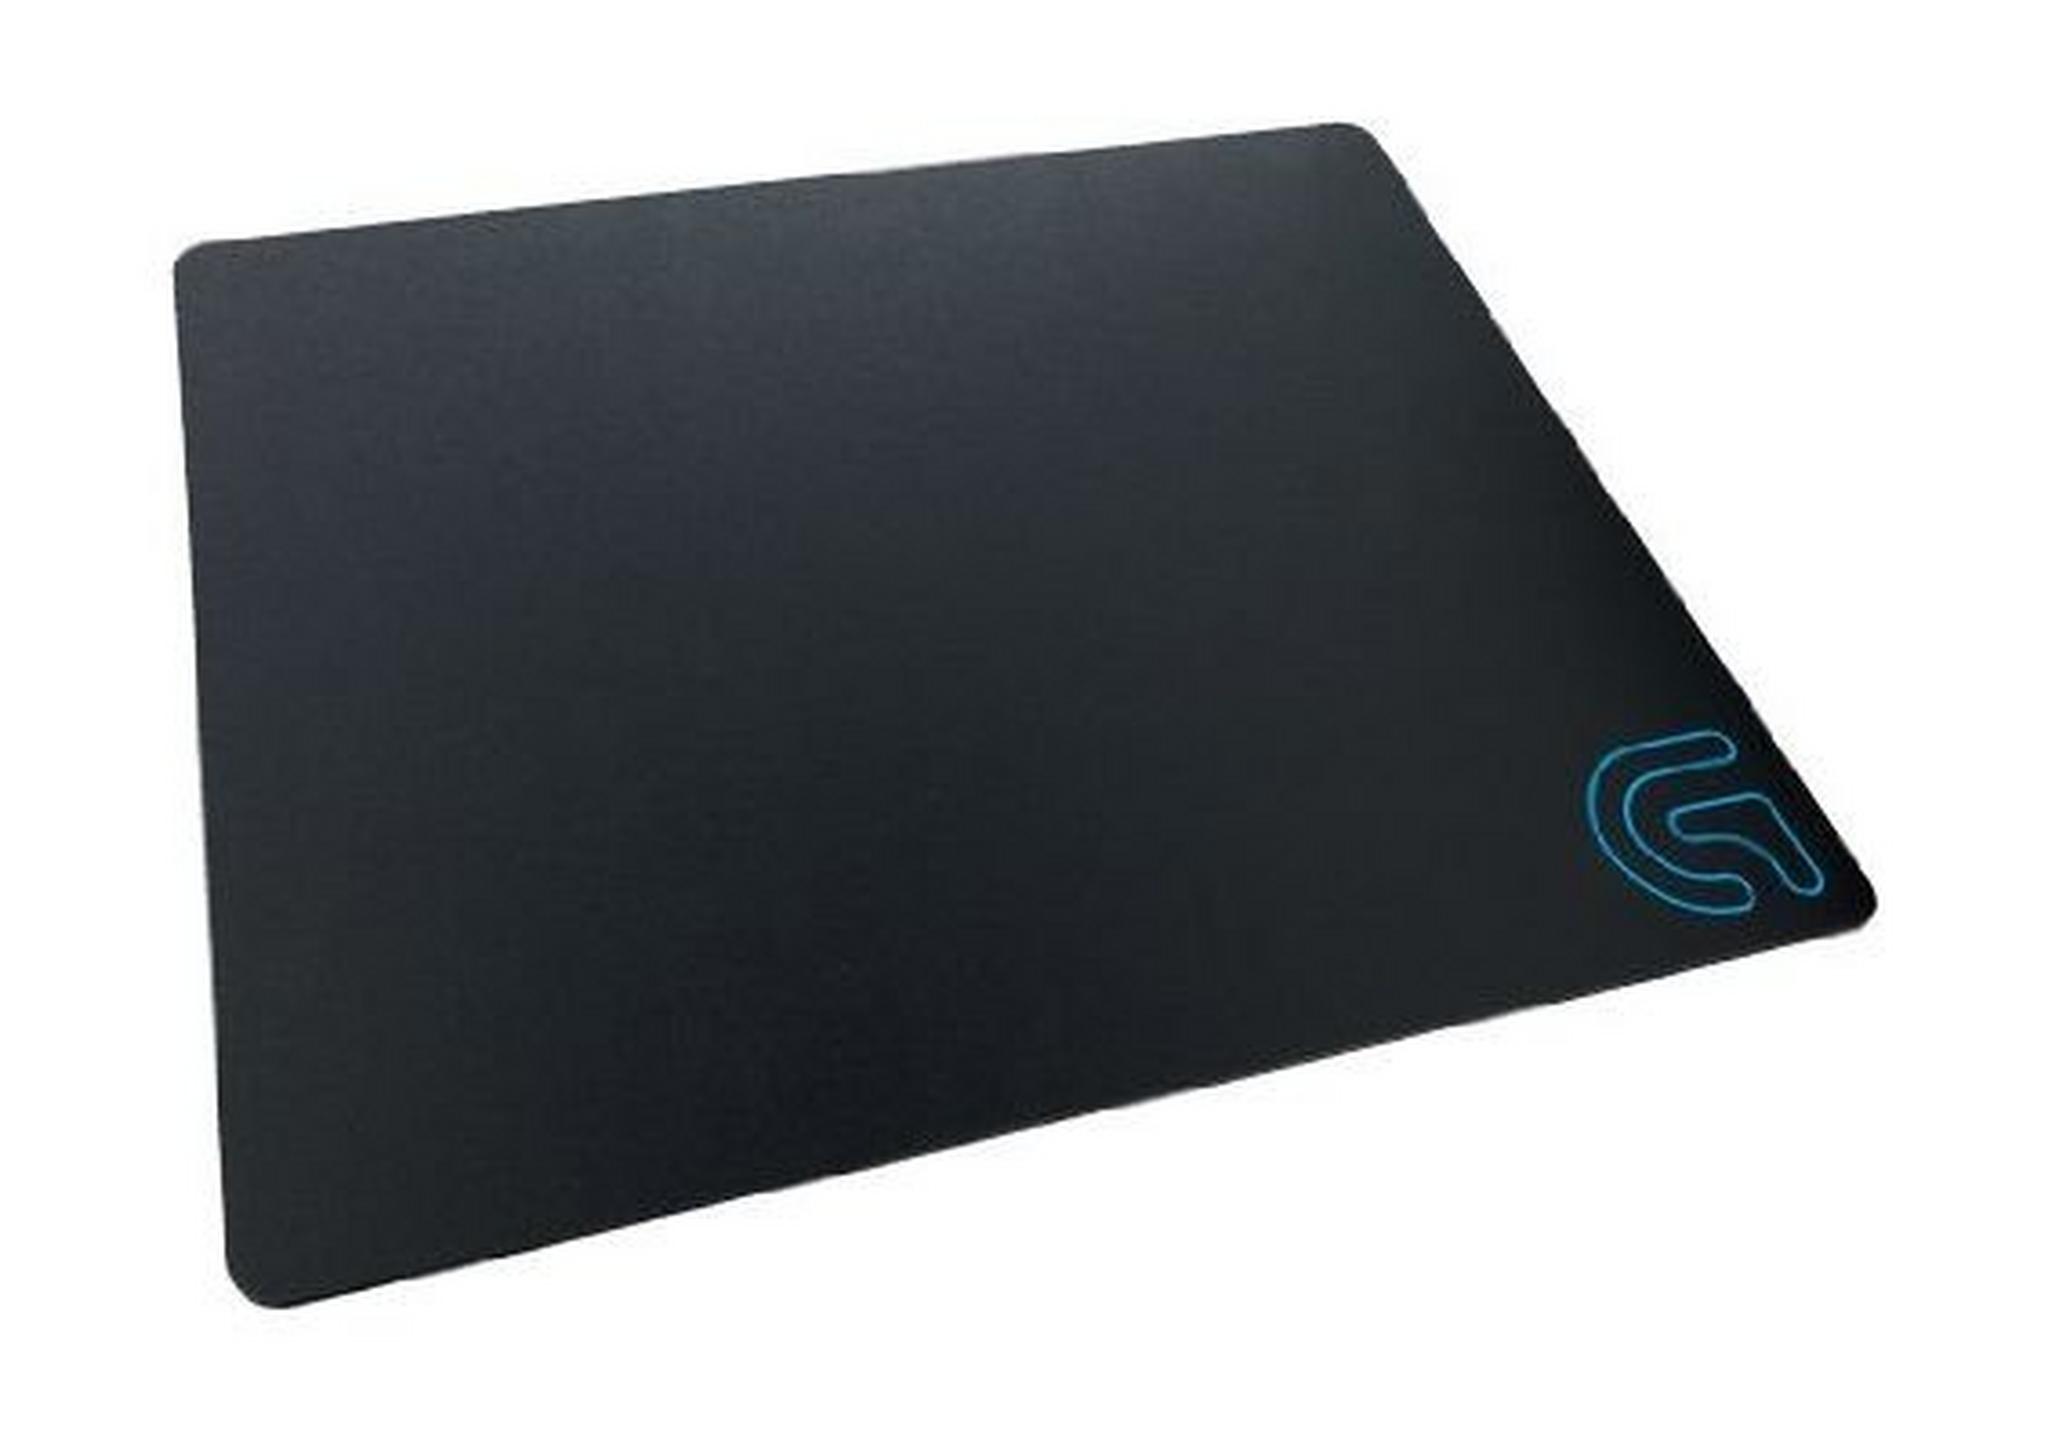 Logitech G440 Hard Gaming Mouse Pad – Black